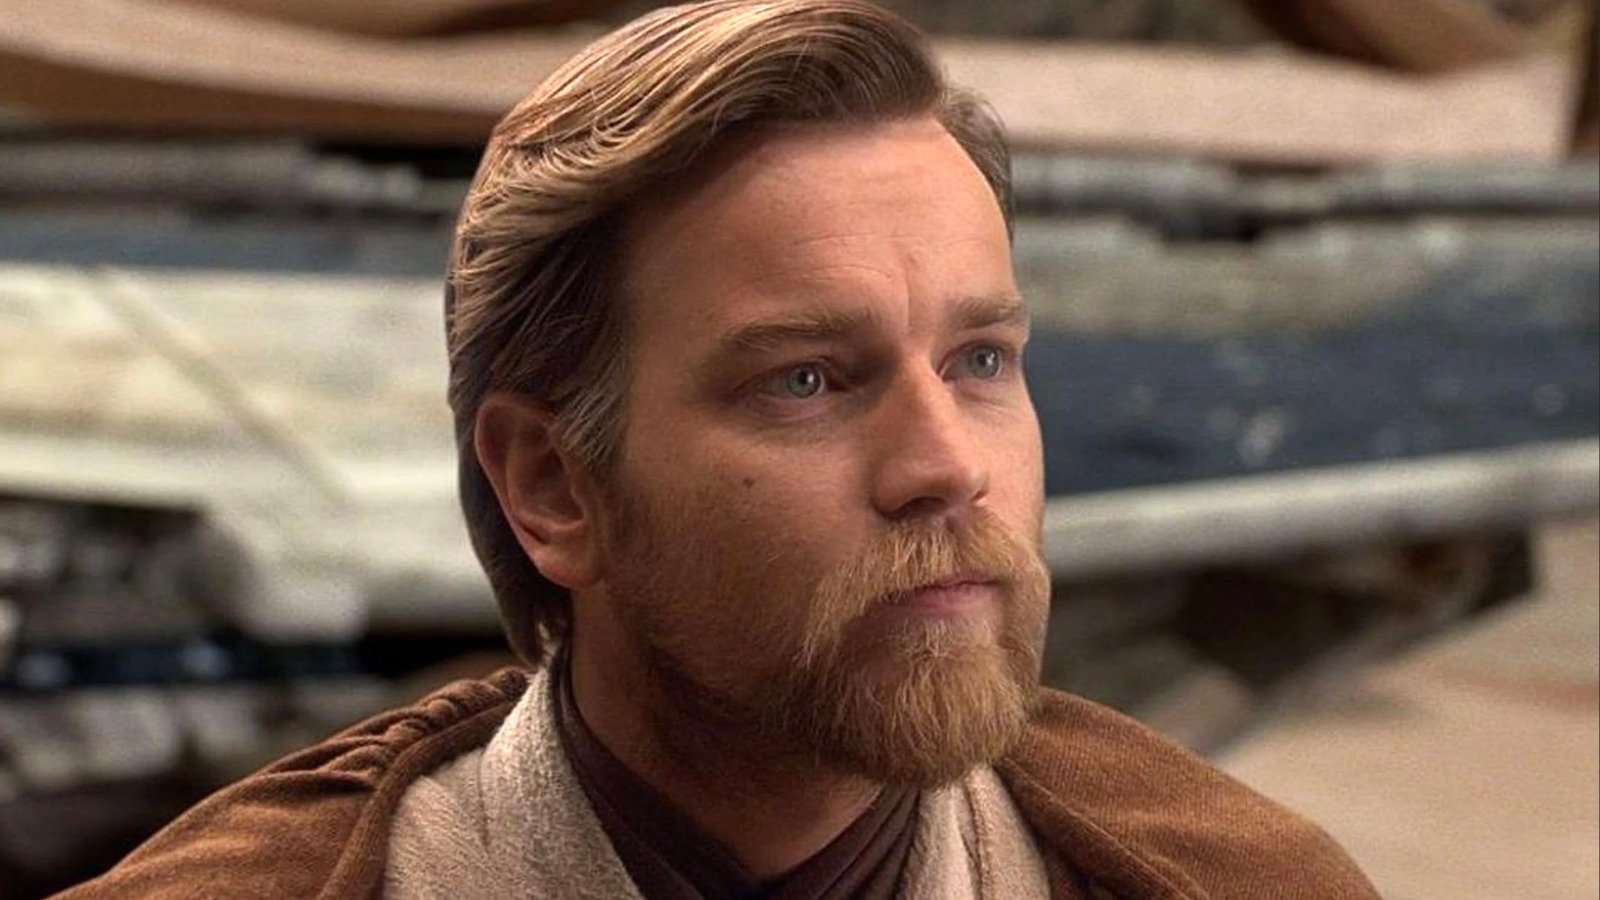 Obi Wan Kenobi First Look Image Are Very Revealing